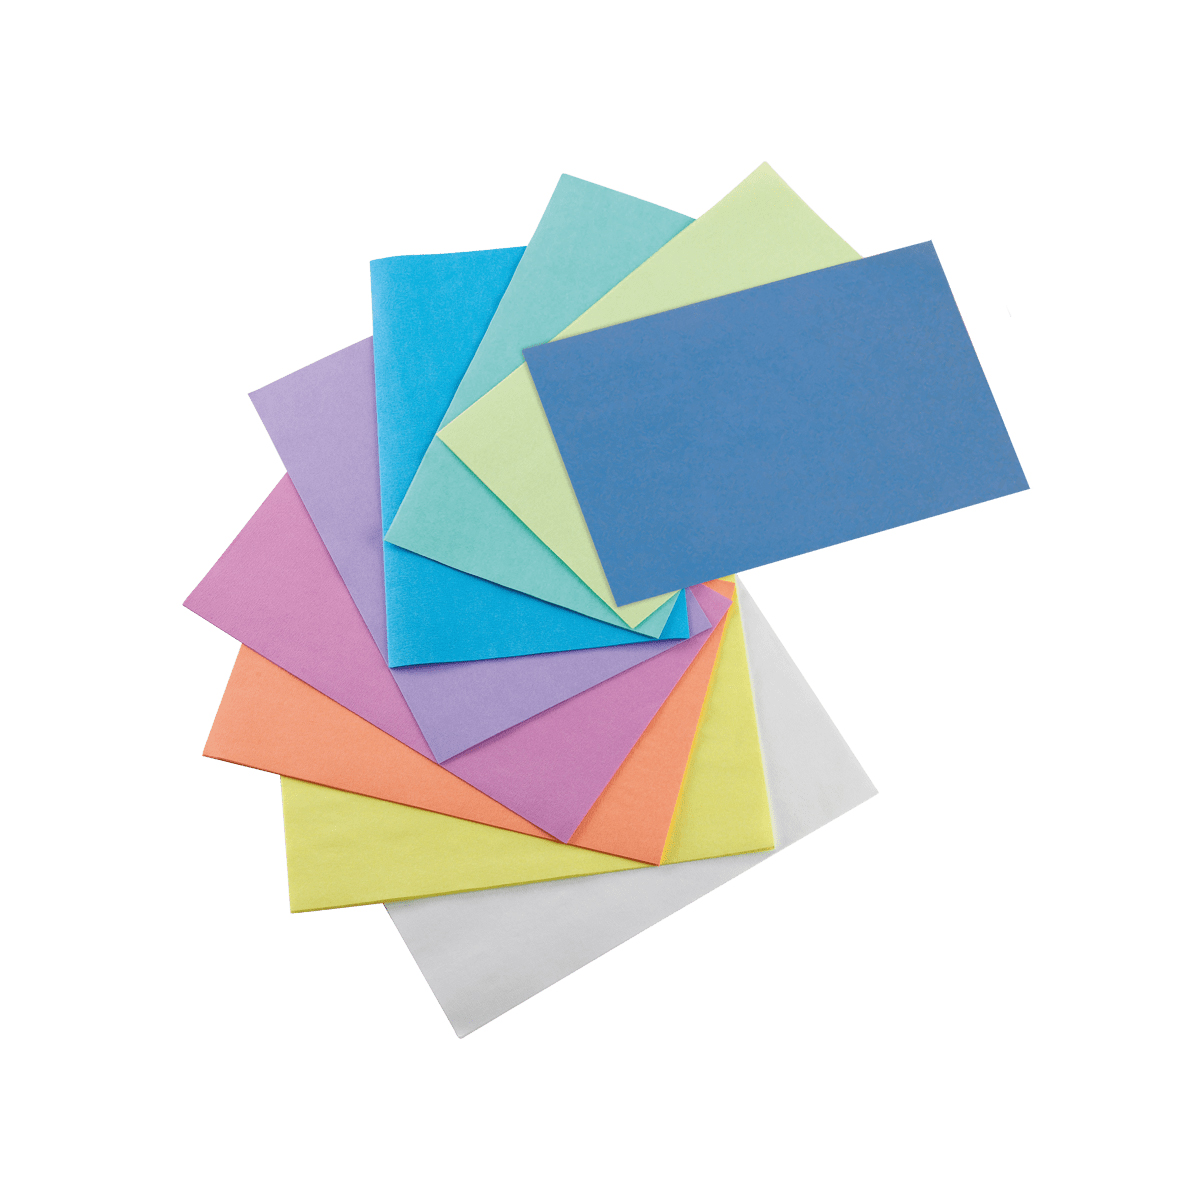 Monoart Trayfilterpapier Normtrays Größe: 18x28cm Normgröße Farbe: blau